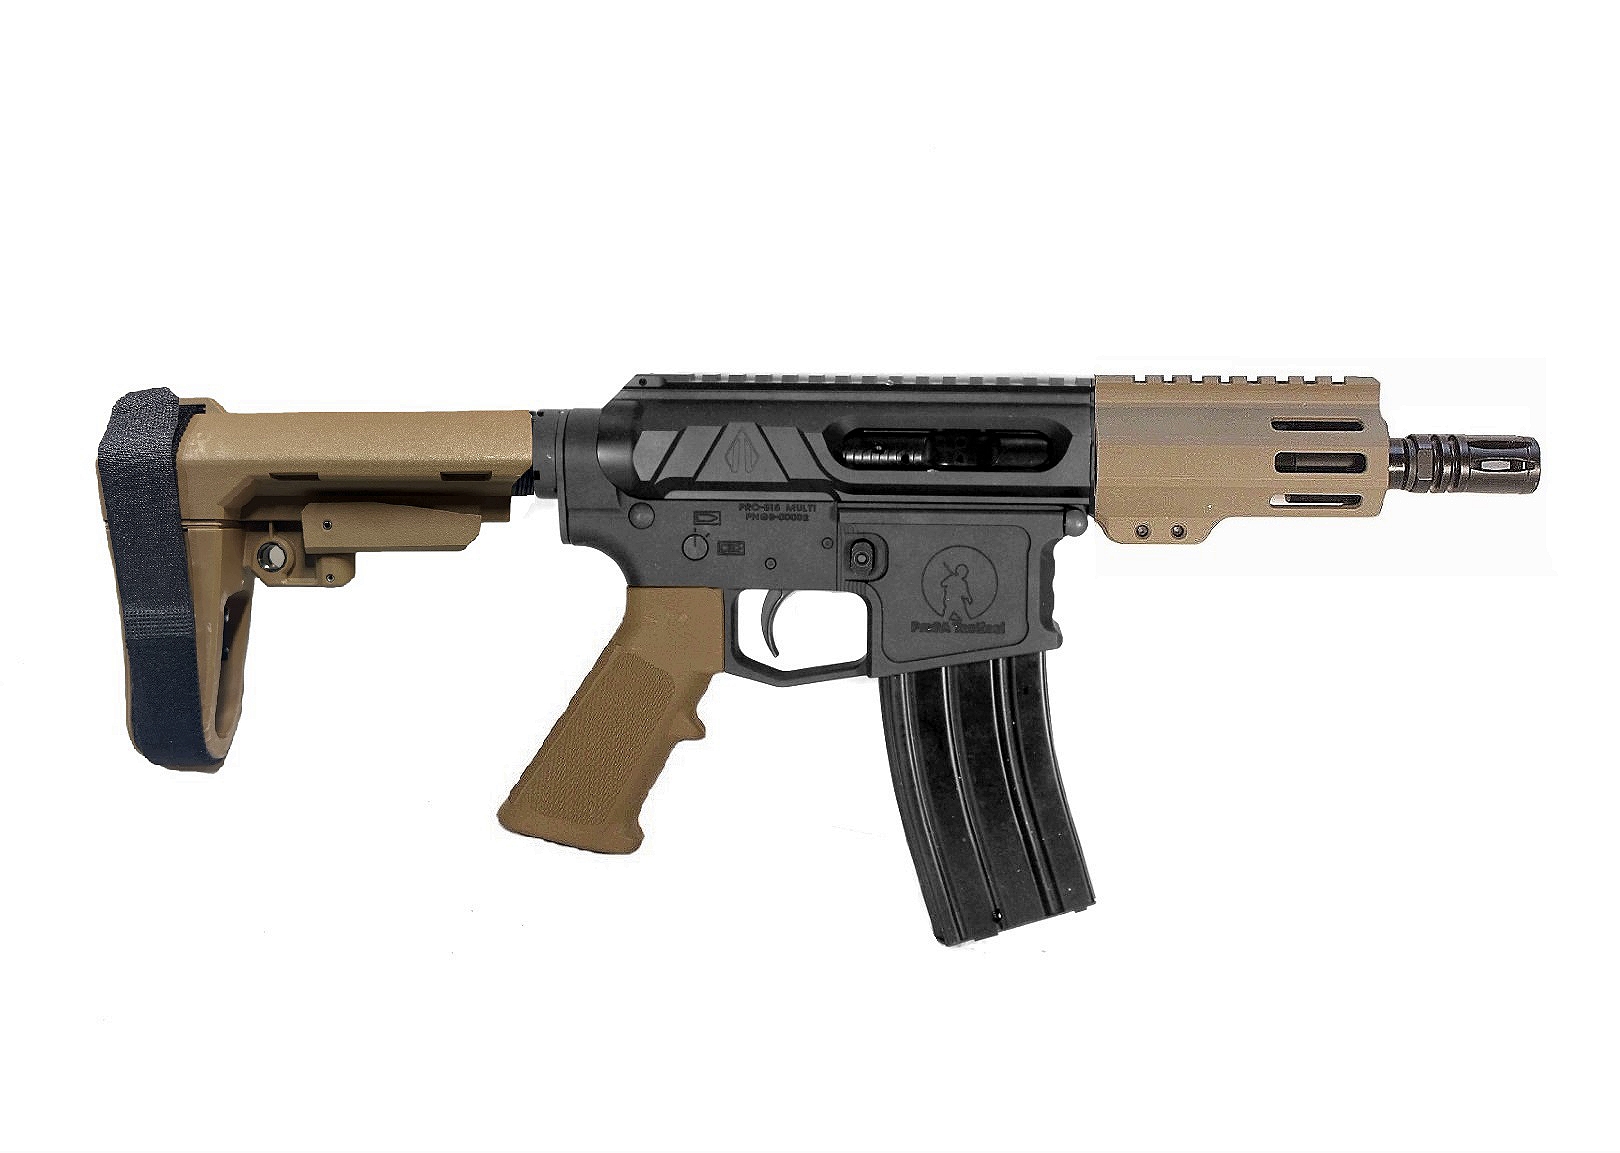 5" 300 Blkout Valiant Premium AR15 Pistol 